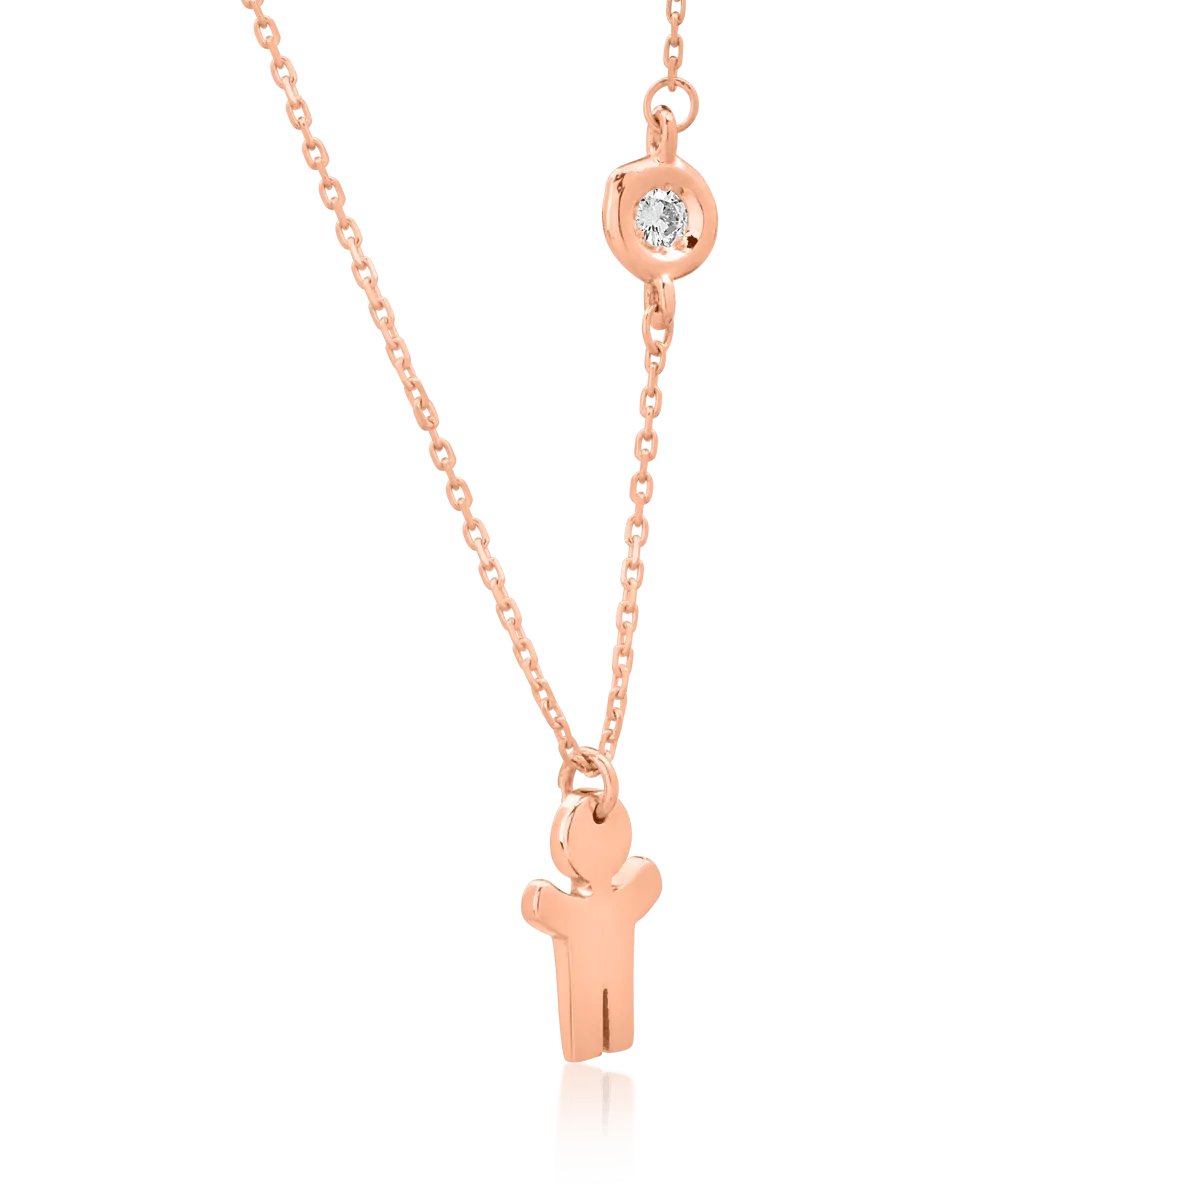 18K rose gold little boy pendant necklace with 0.02ct diamond